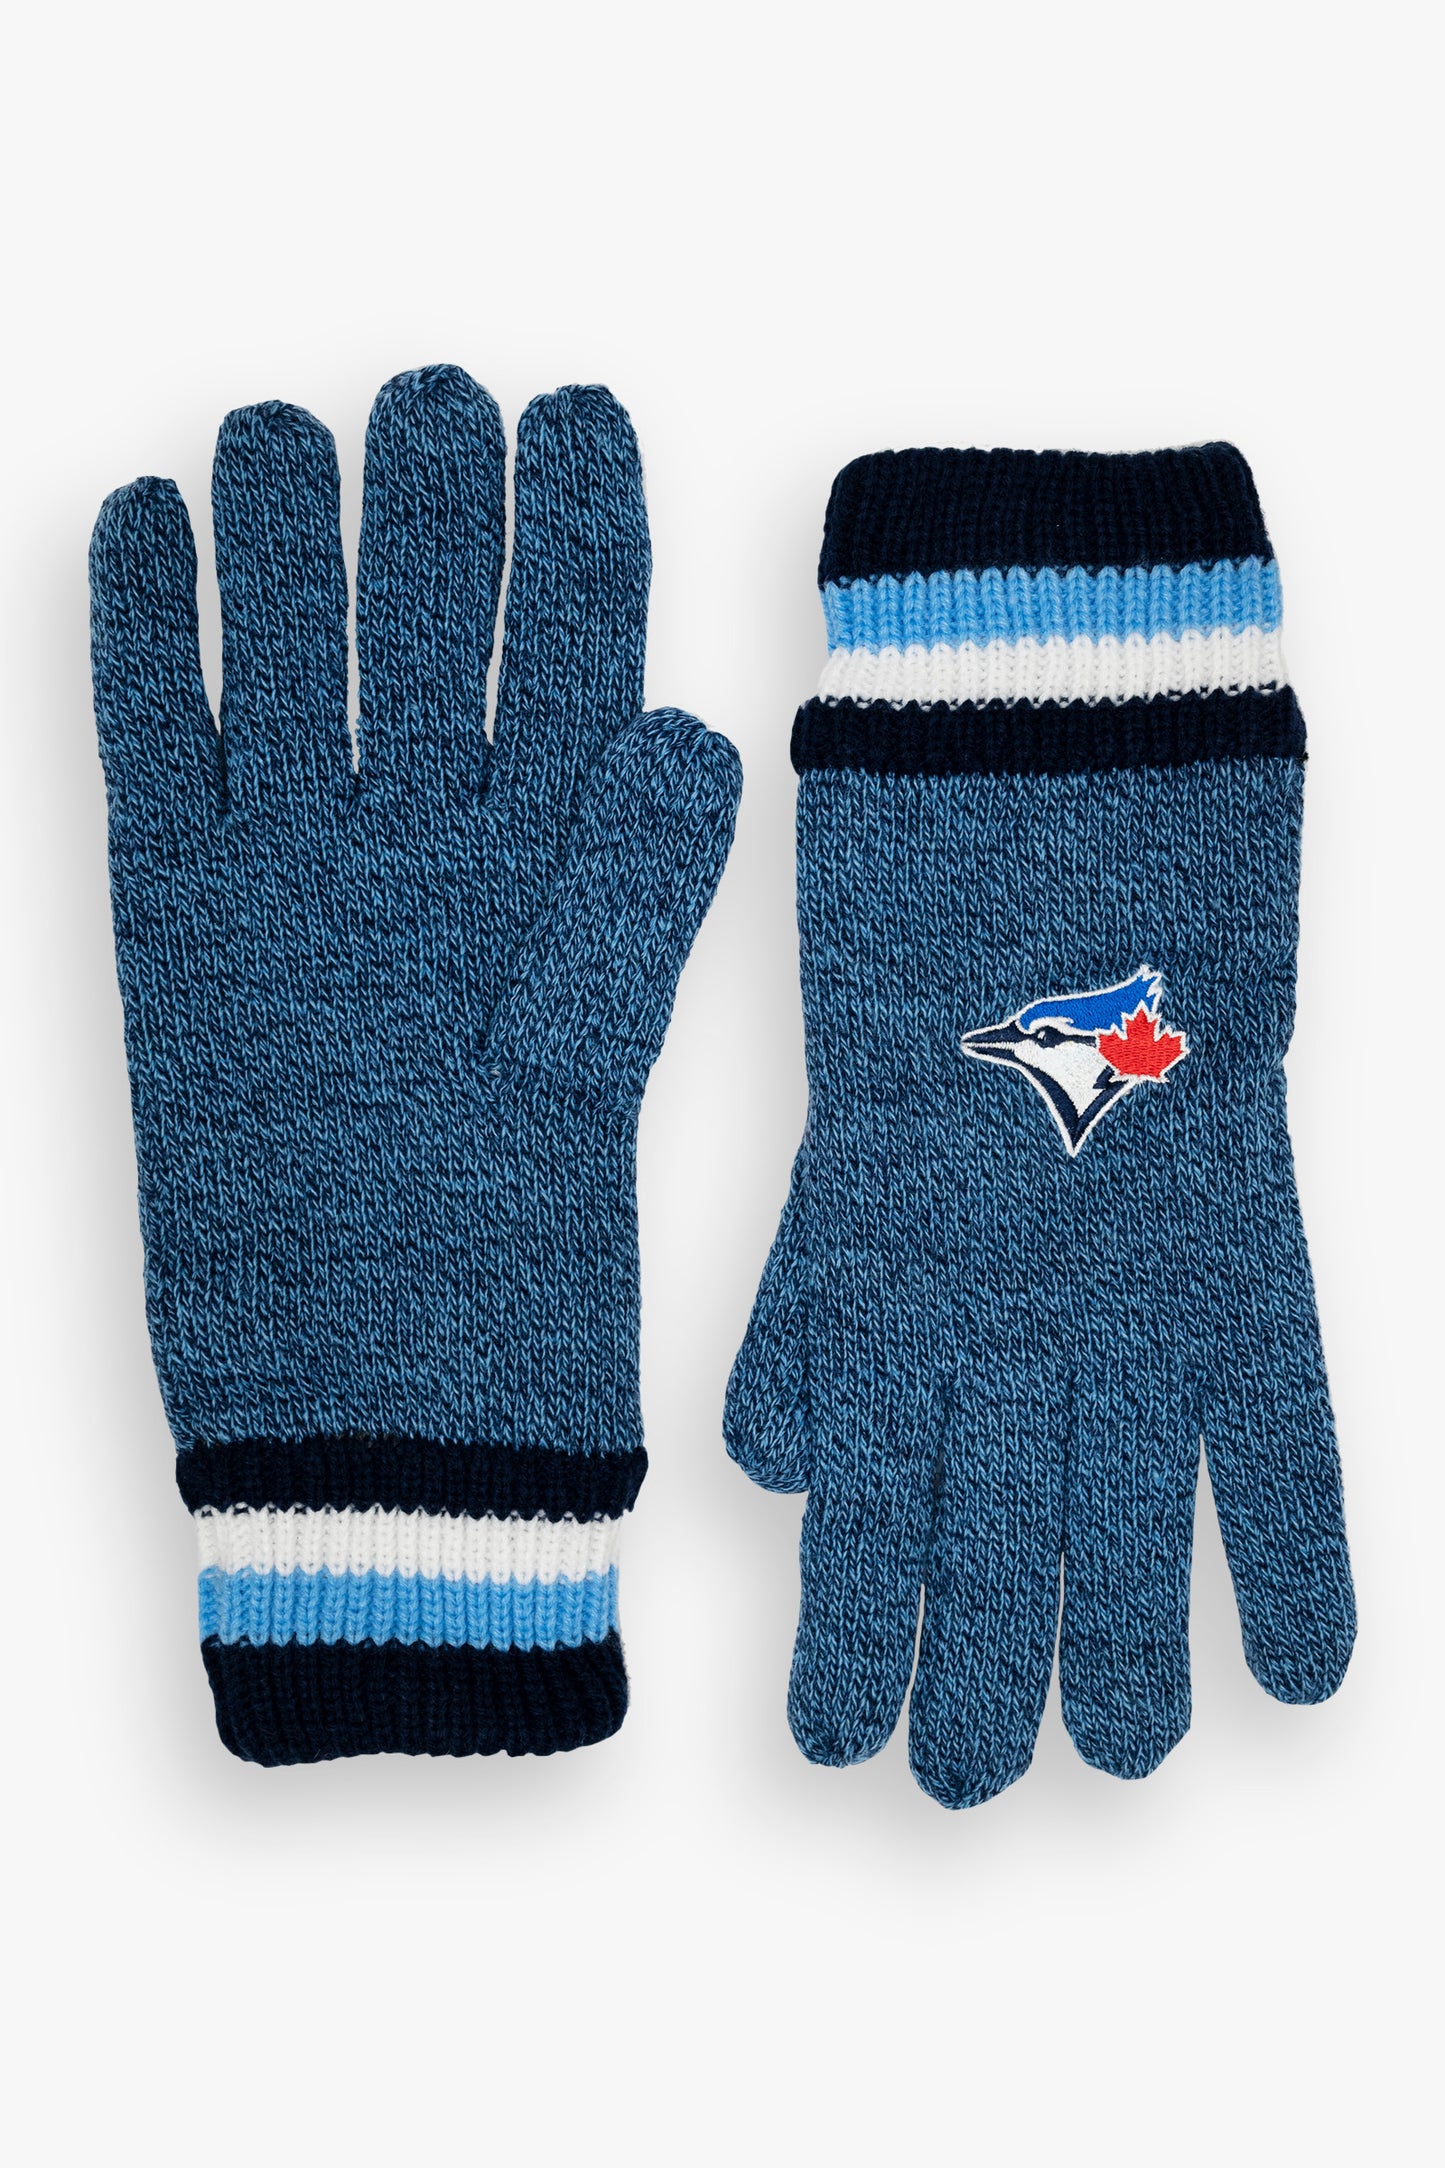 MLB Toronto Blue Jays Adult Men's Thermal Lined Gloves